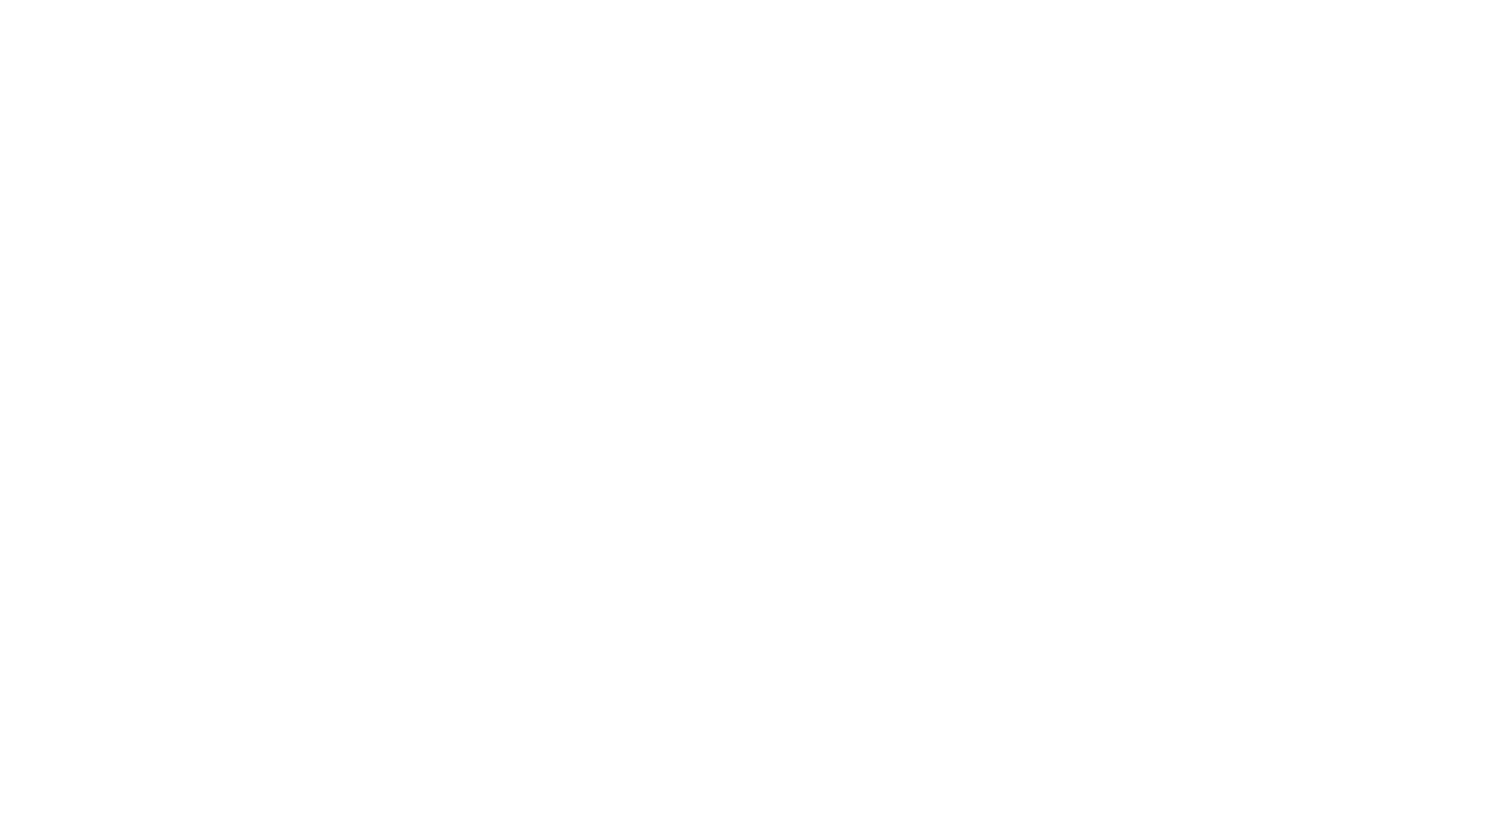 CHICAGO REPERTORY BALLET